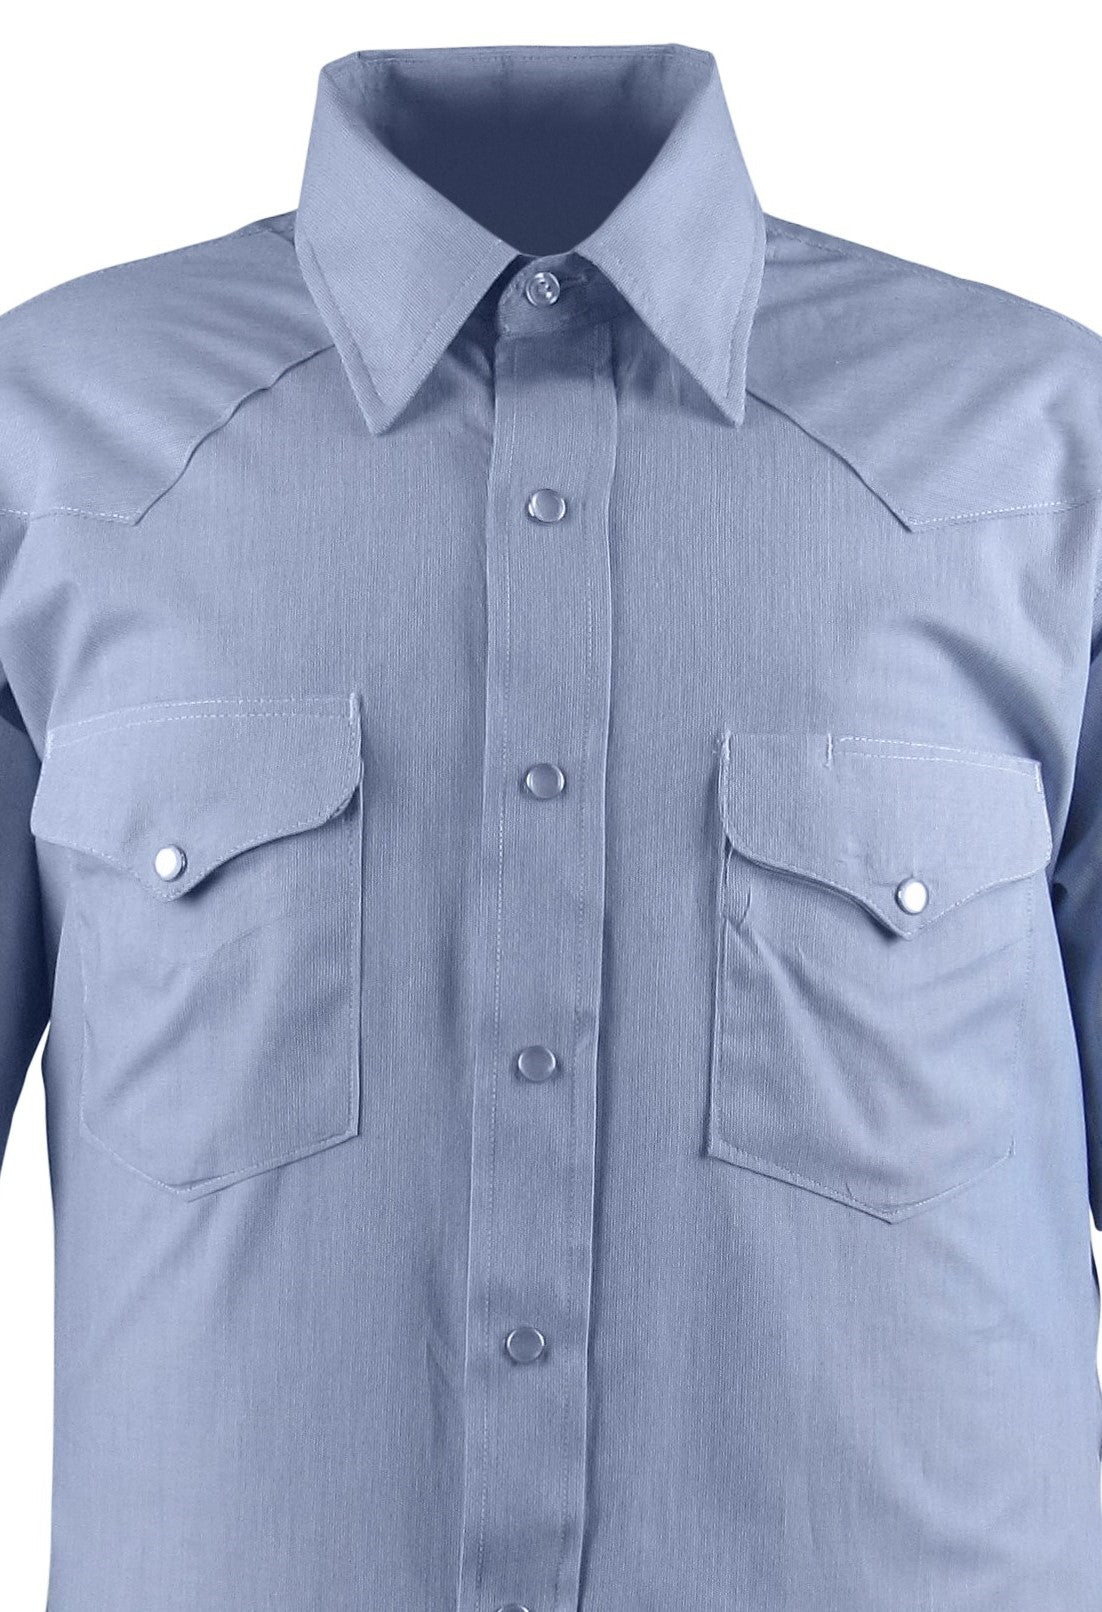 Flying R Ranchwear - Blue Micro Stripe - Long Sleeve - Snaps - Save $20!